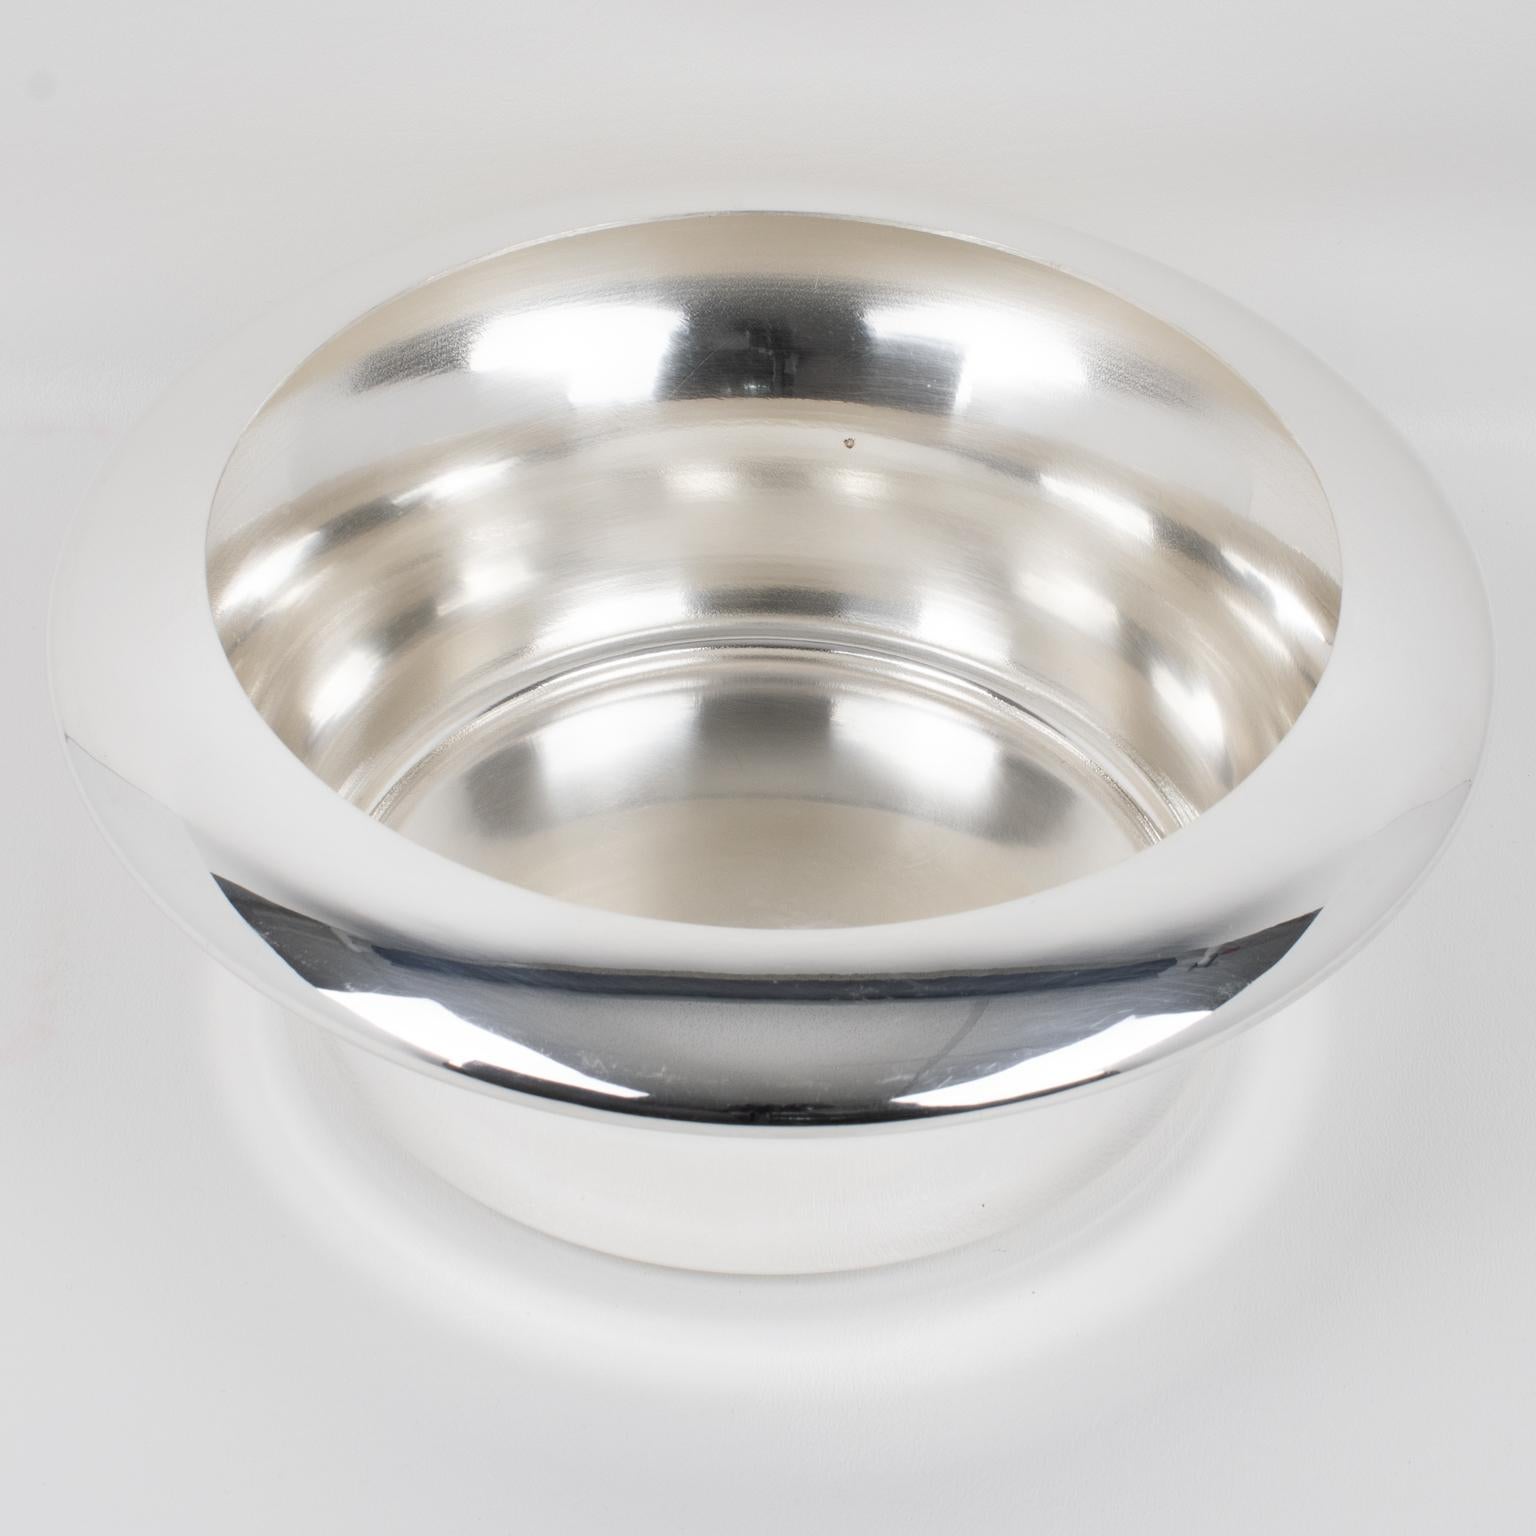 Late 20th Century Lino Sabattini Italy Silver Plate and Crystal Caviar Bowl Dish Server